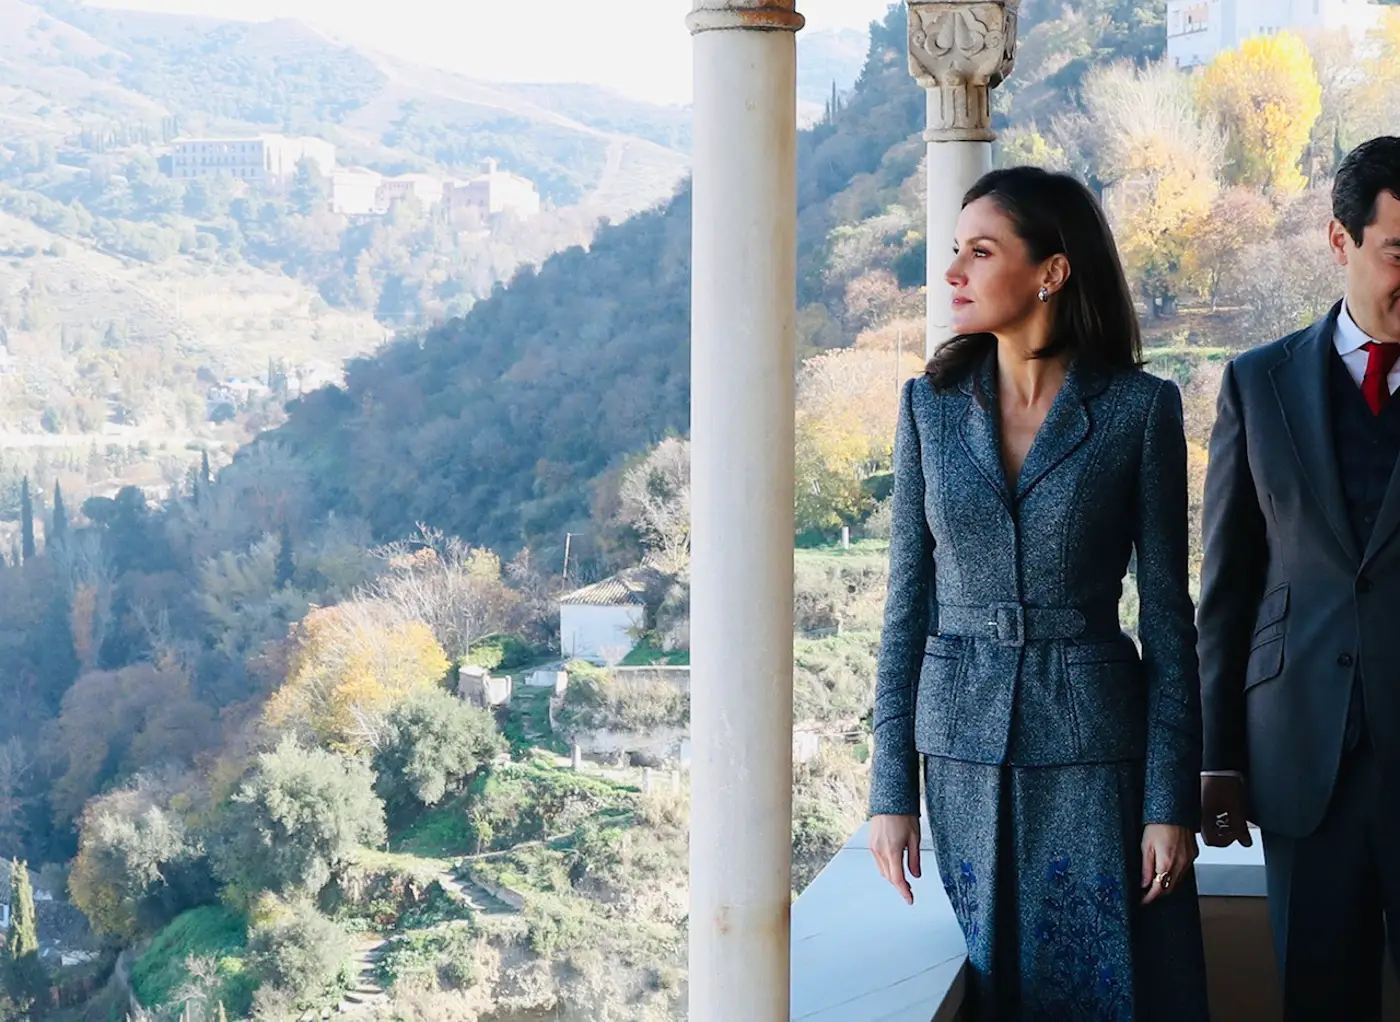 Queen Letizia of Spain was looking elegant in blue Felipe Varela Tweed suit during Granada visit